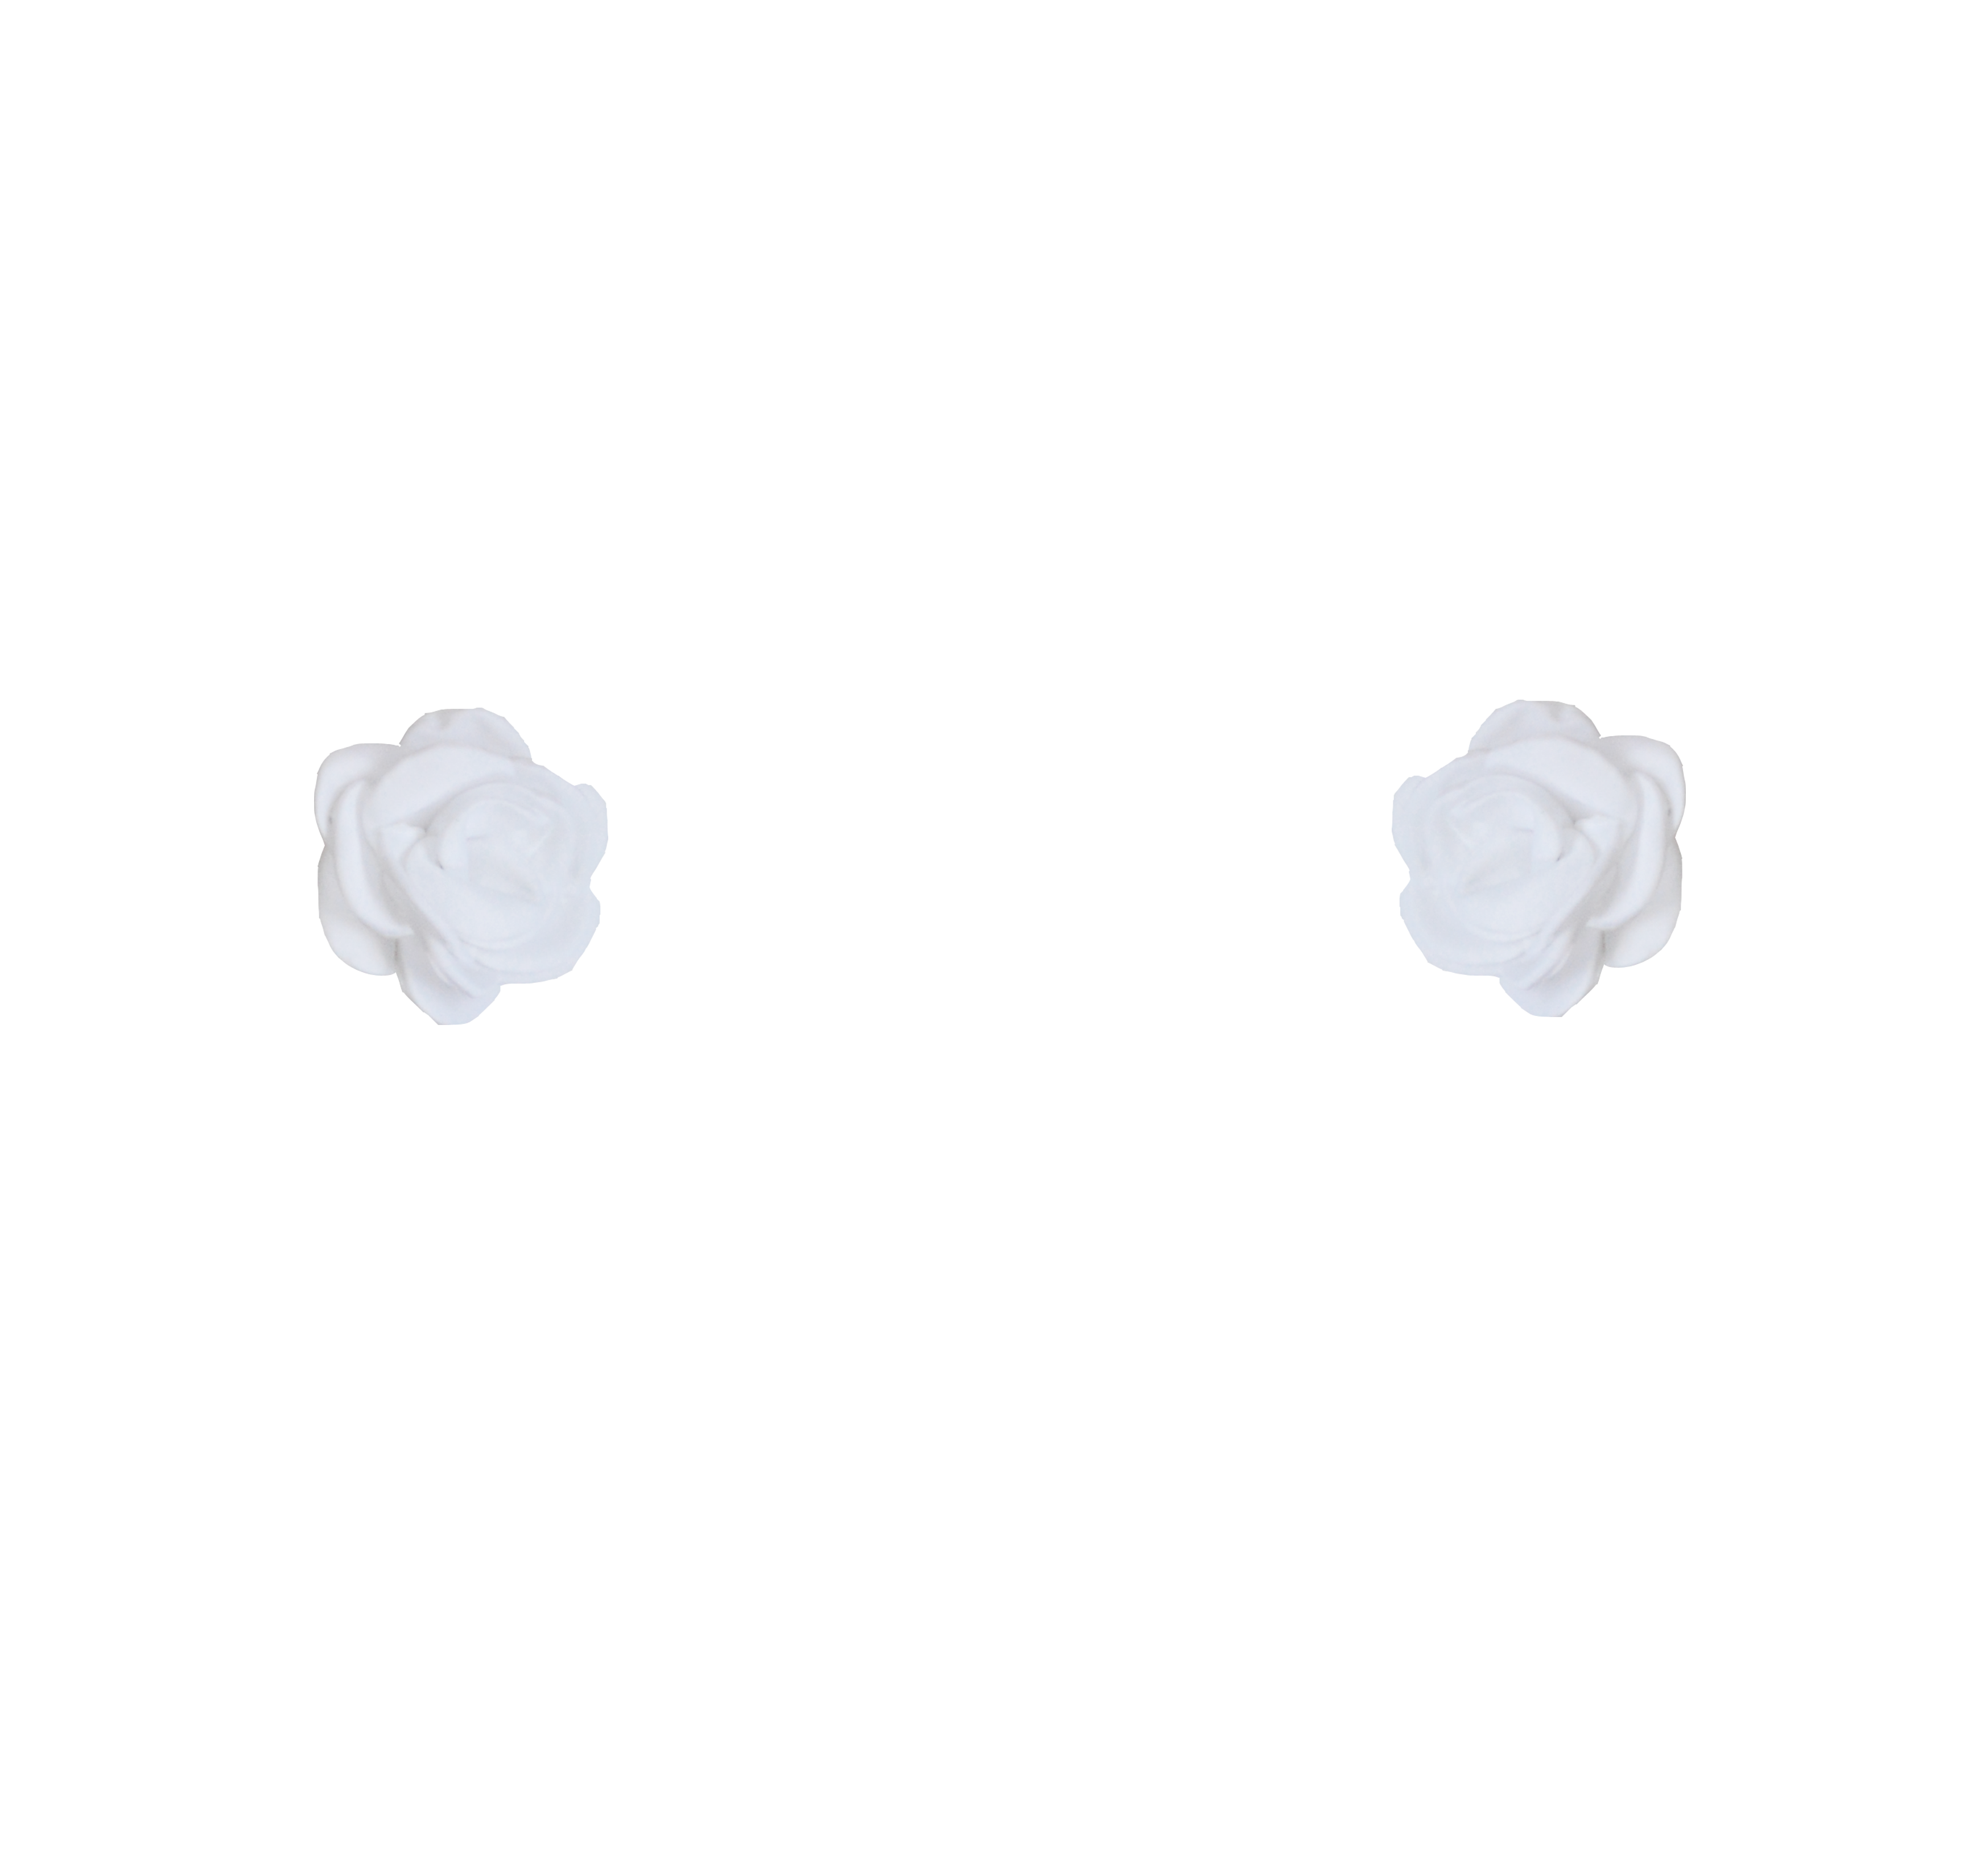 fleurs blanche